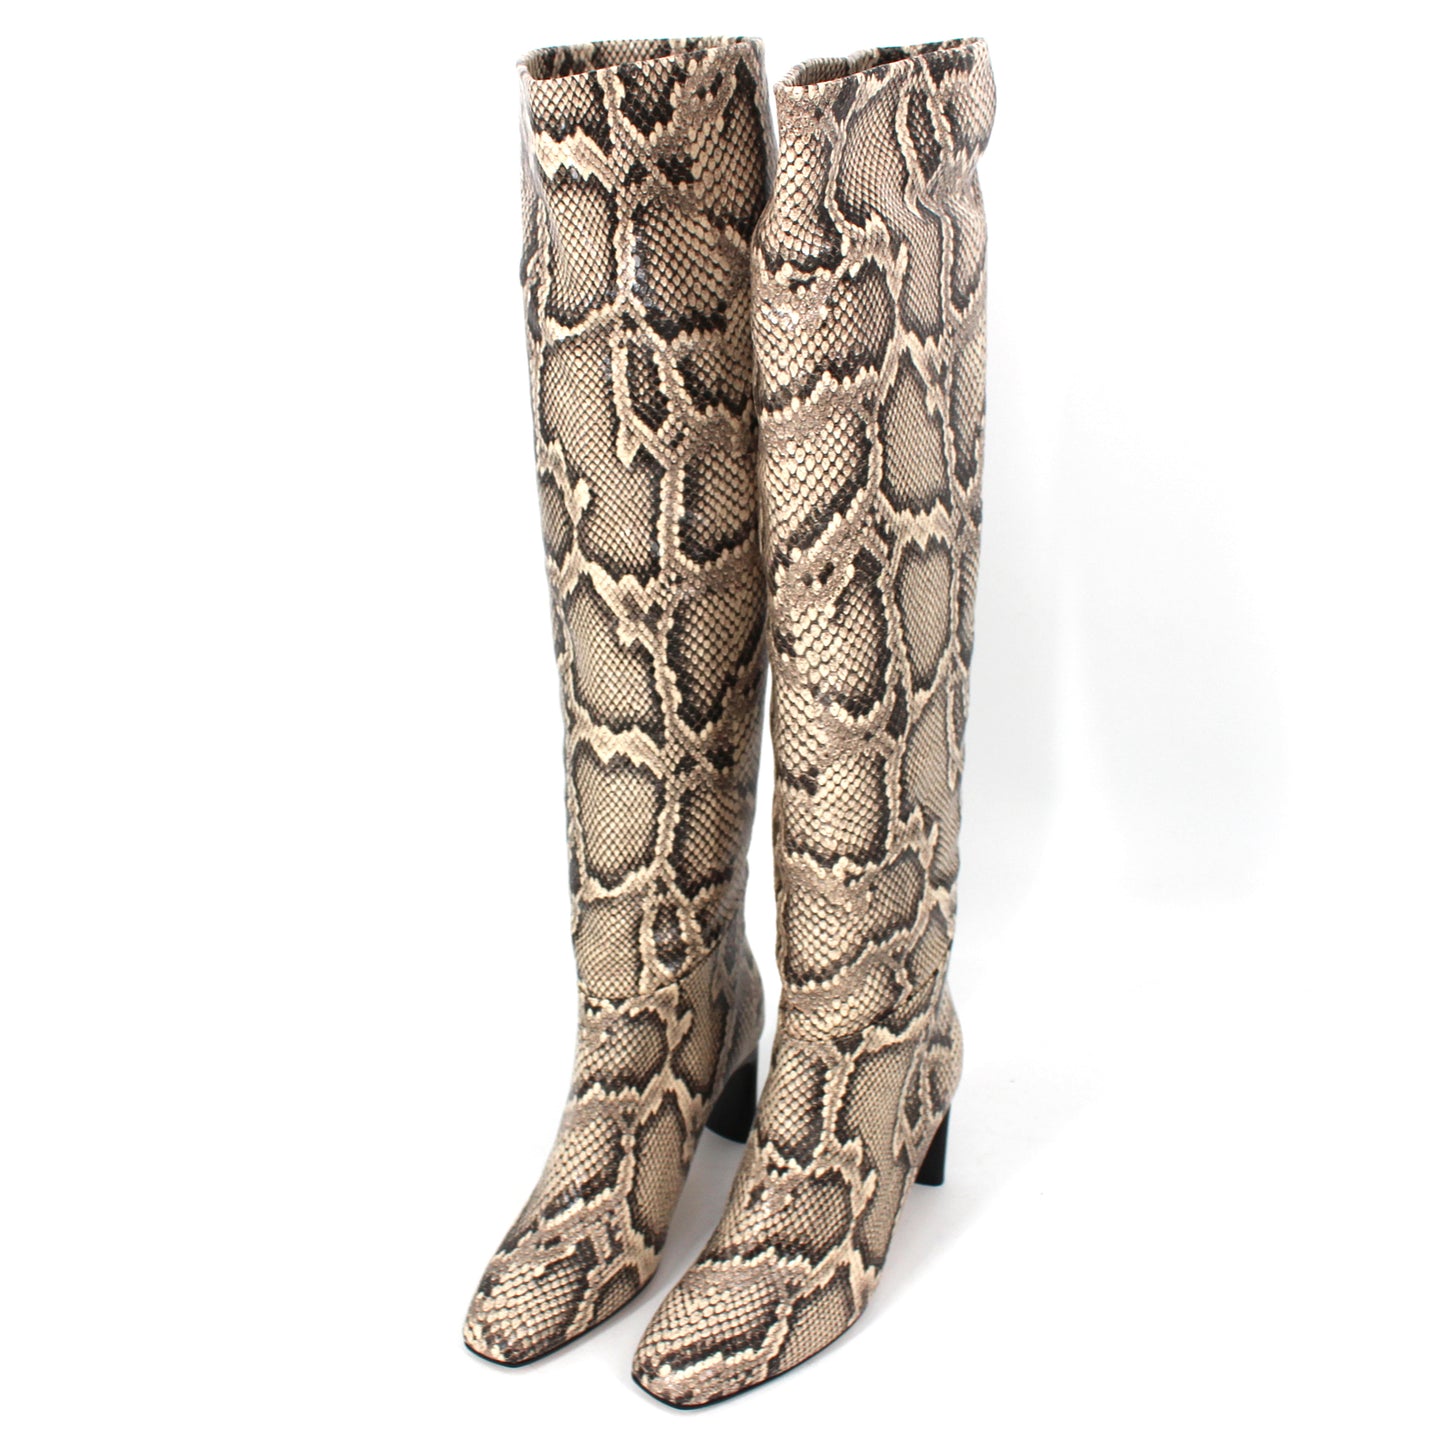 Tamara Mellon Legacy Snakeskin Boots